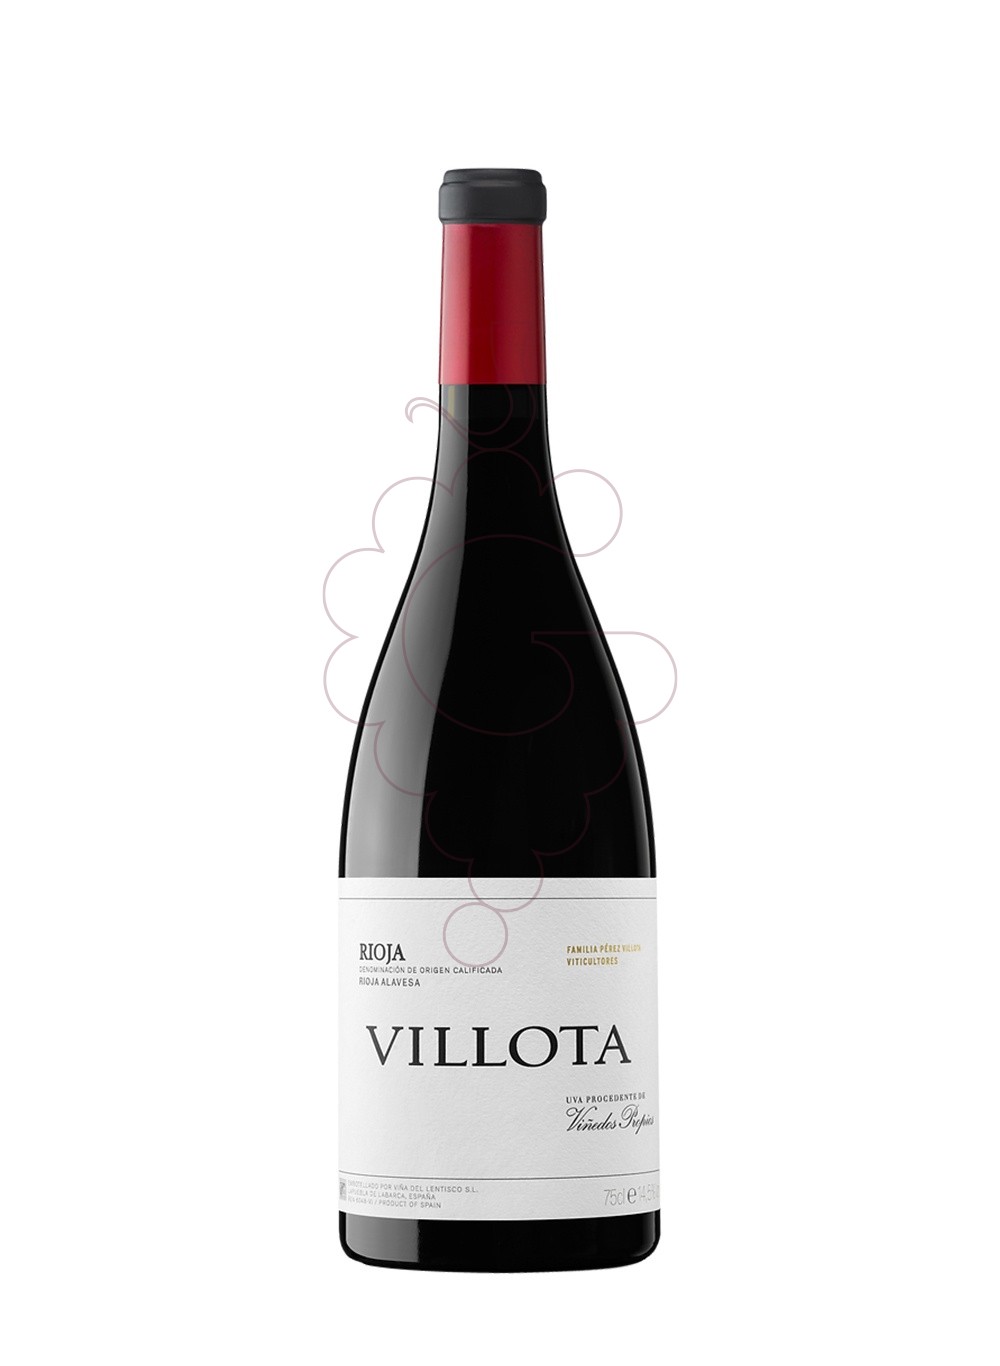 Photo Villota d.ricardo ng 2018 75cl red wine